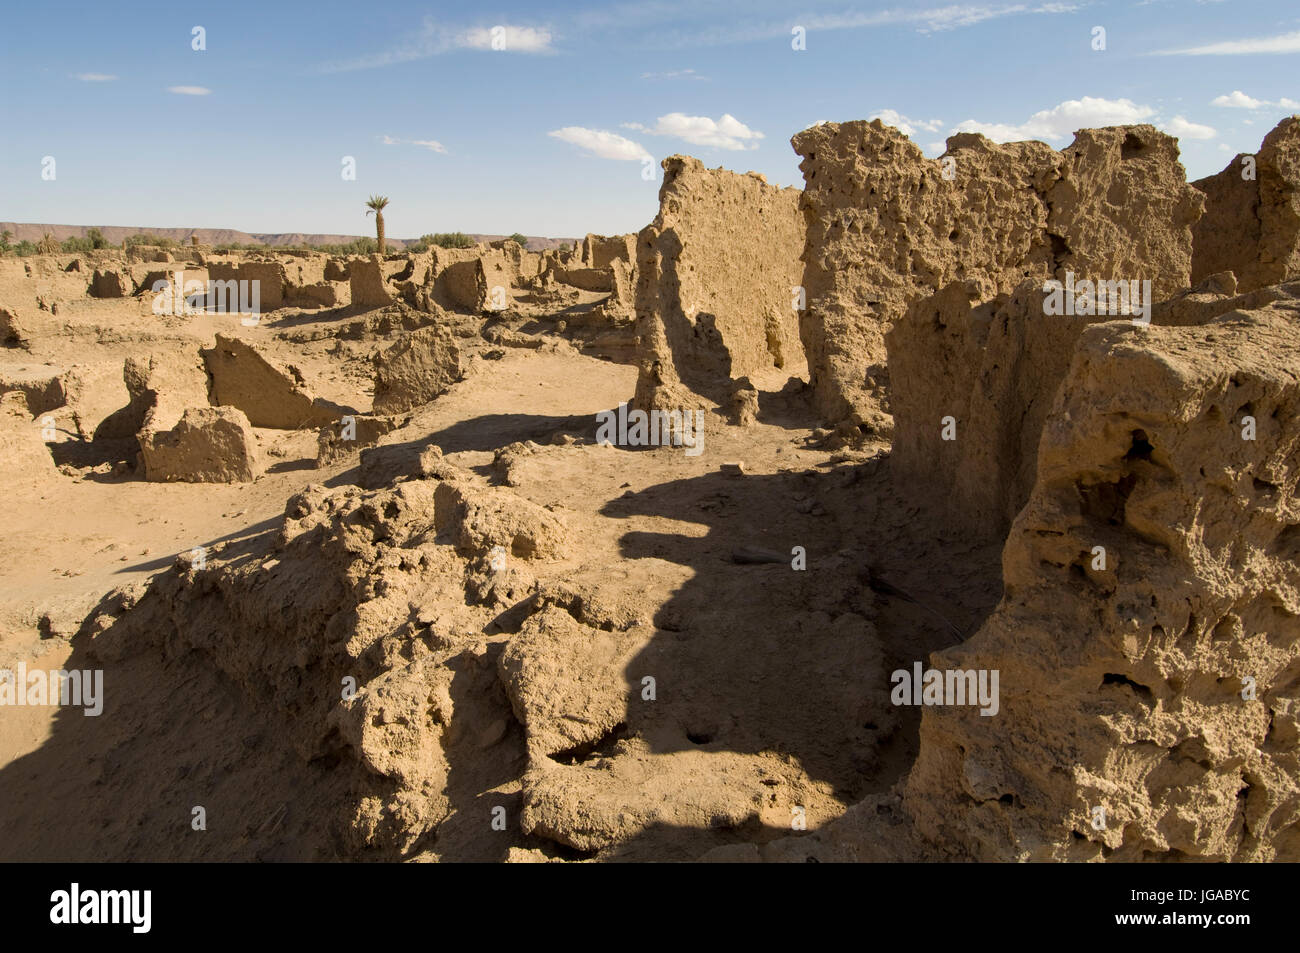 Jarma (Germa), Garamantes archaeological site, Fezzan, Libya. Stock Photo